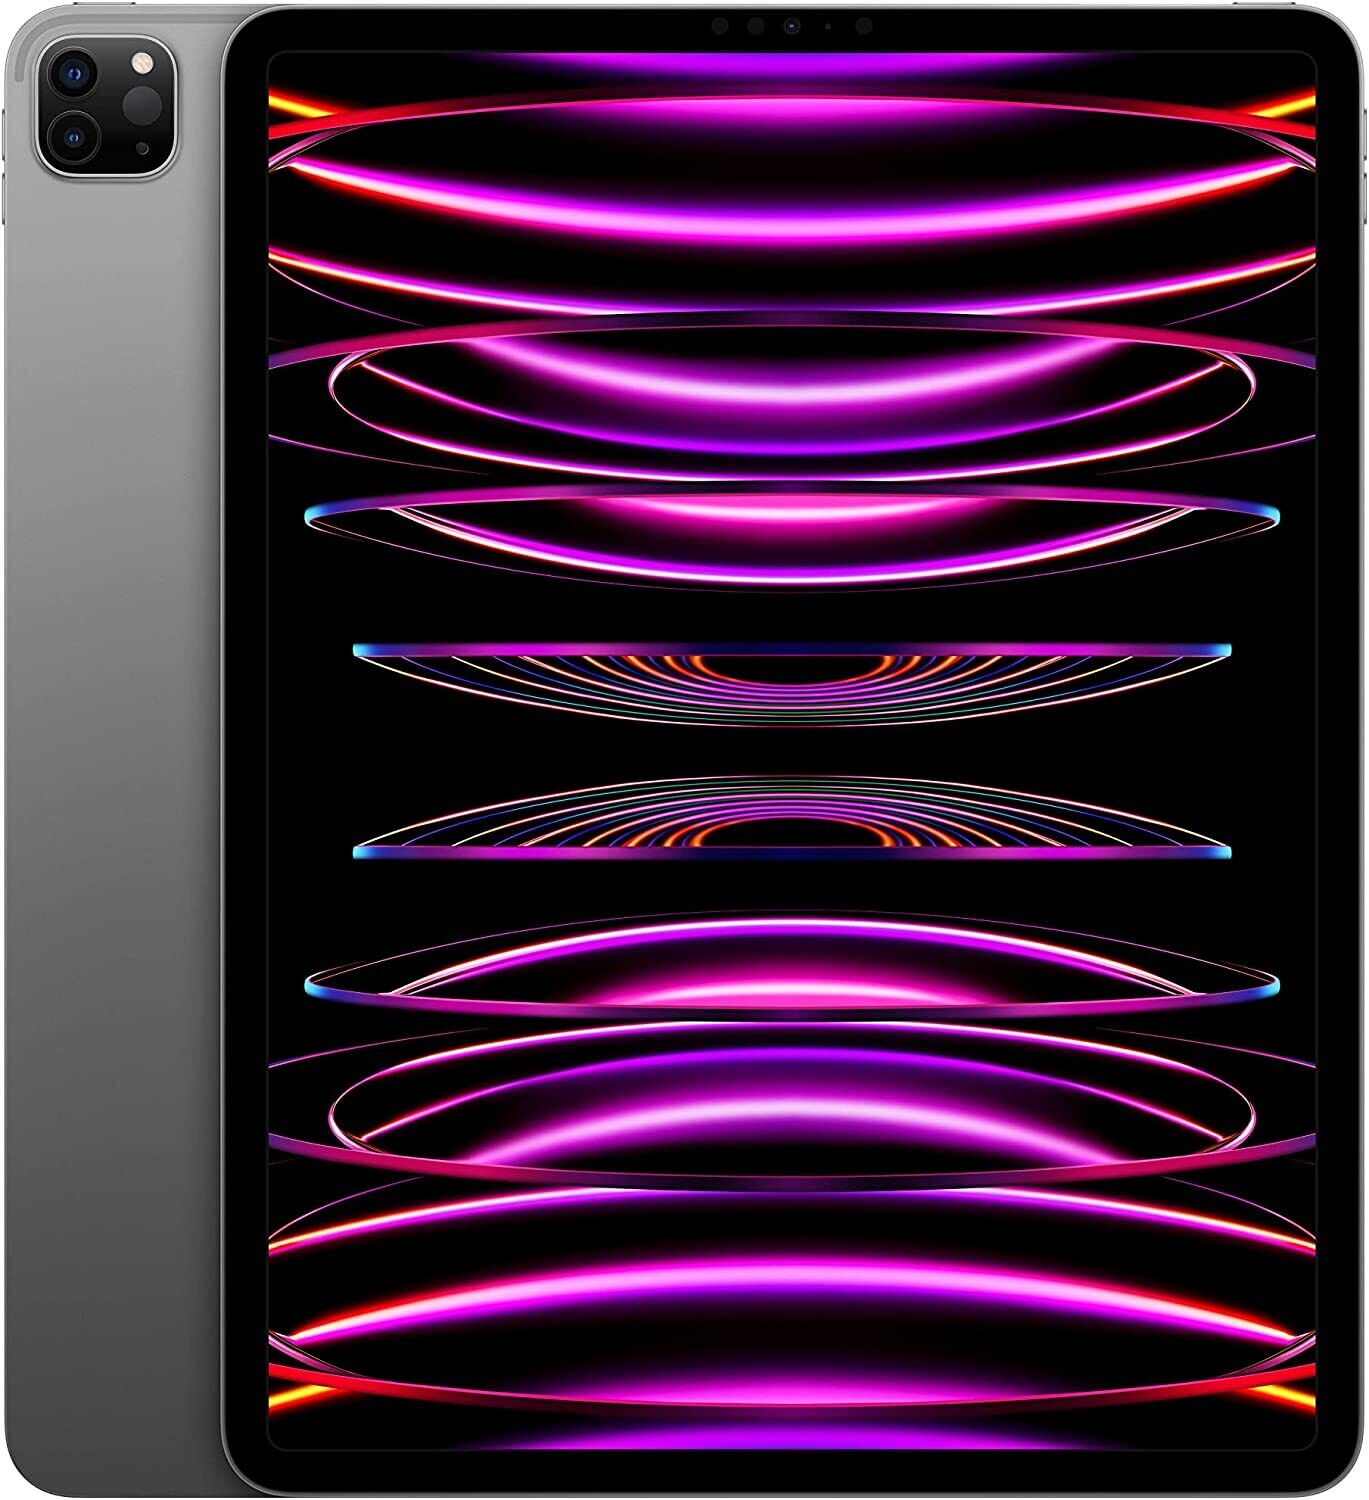 2022 Apple 12.9-inch iPad Pro (Wi-Fi + Cellular, 256GB) - Space Gray (6th Generation)